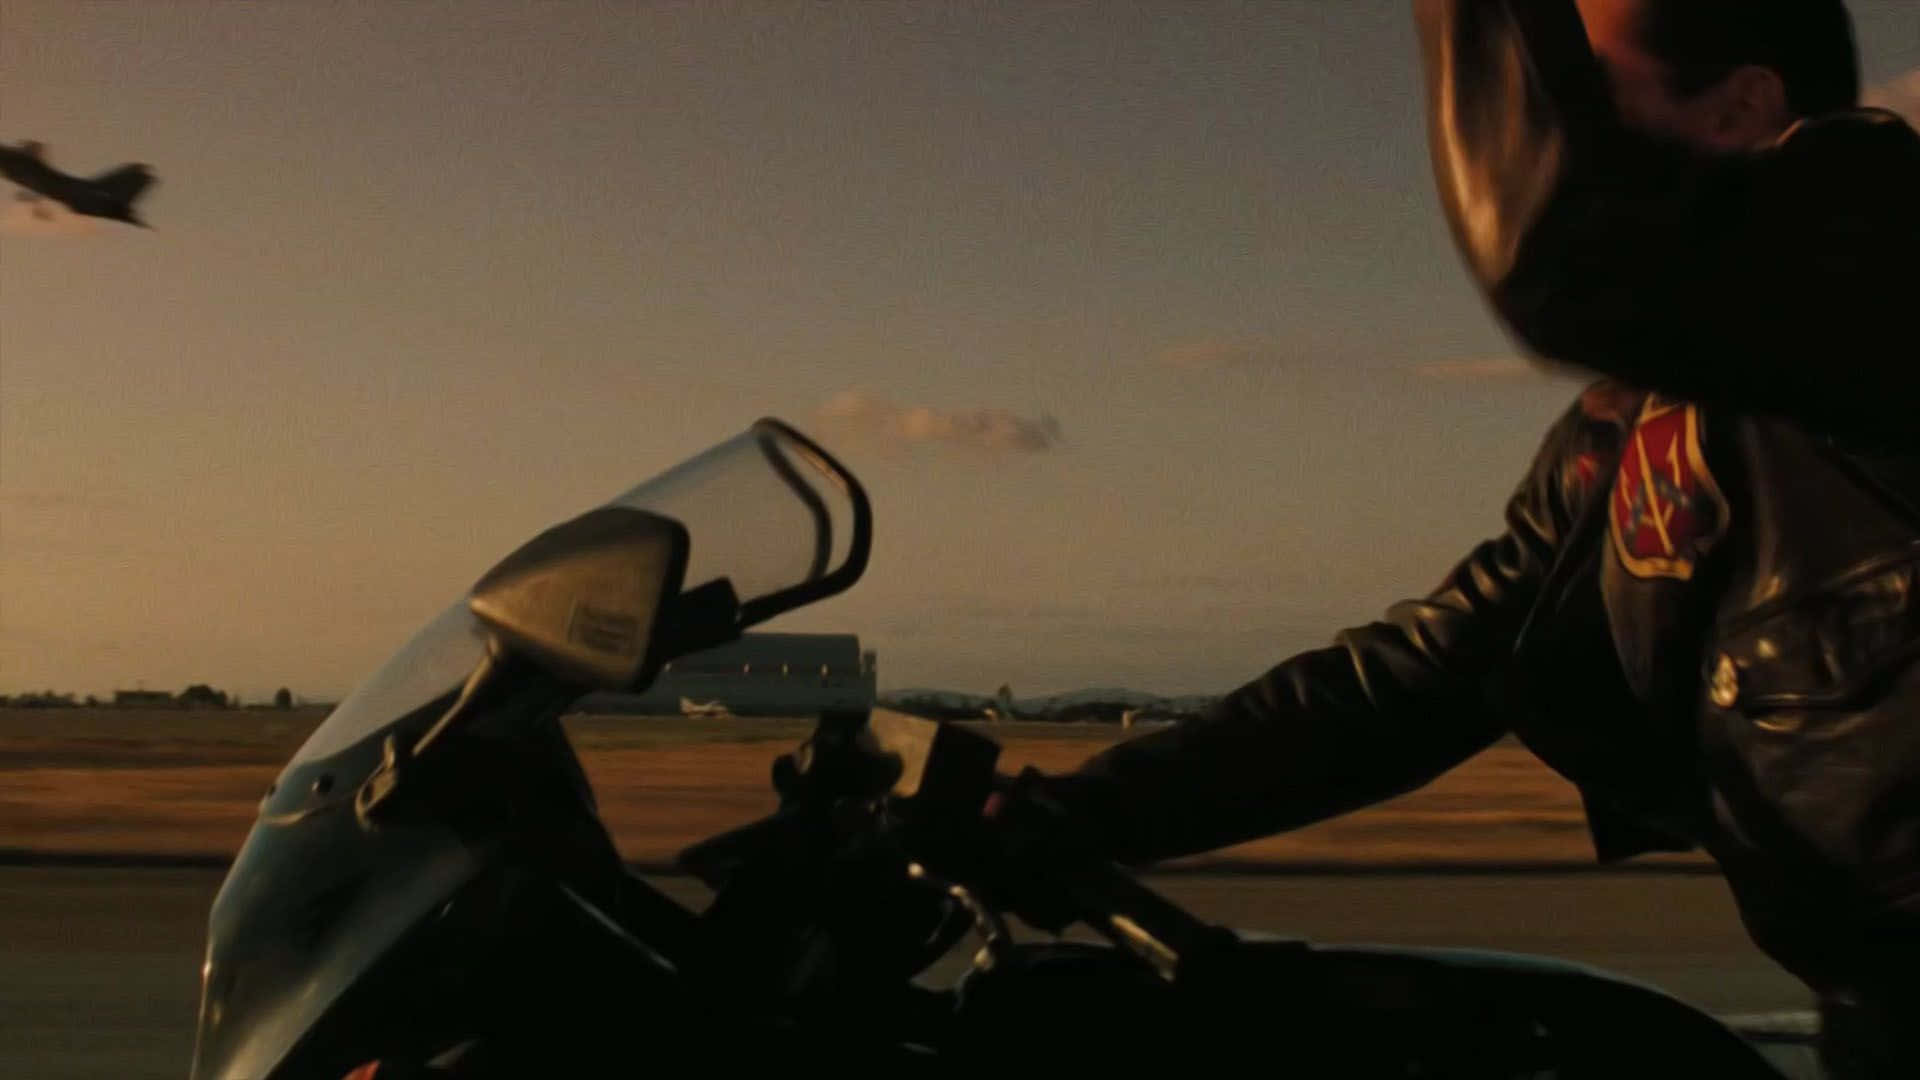 Top Gun Motorcycle Movie Scene Wallpaper